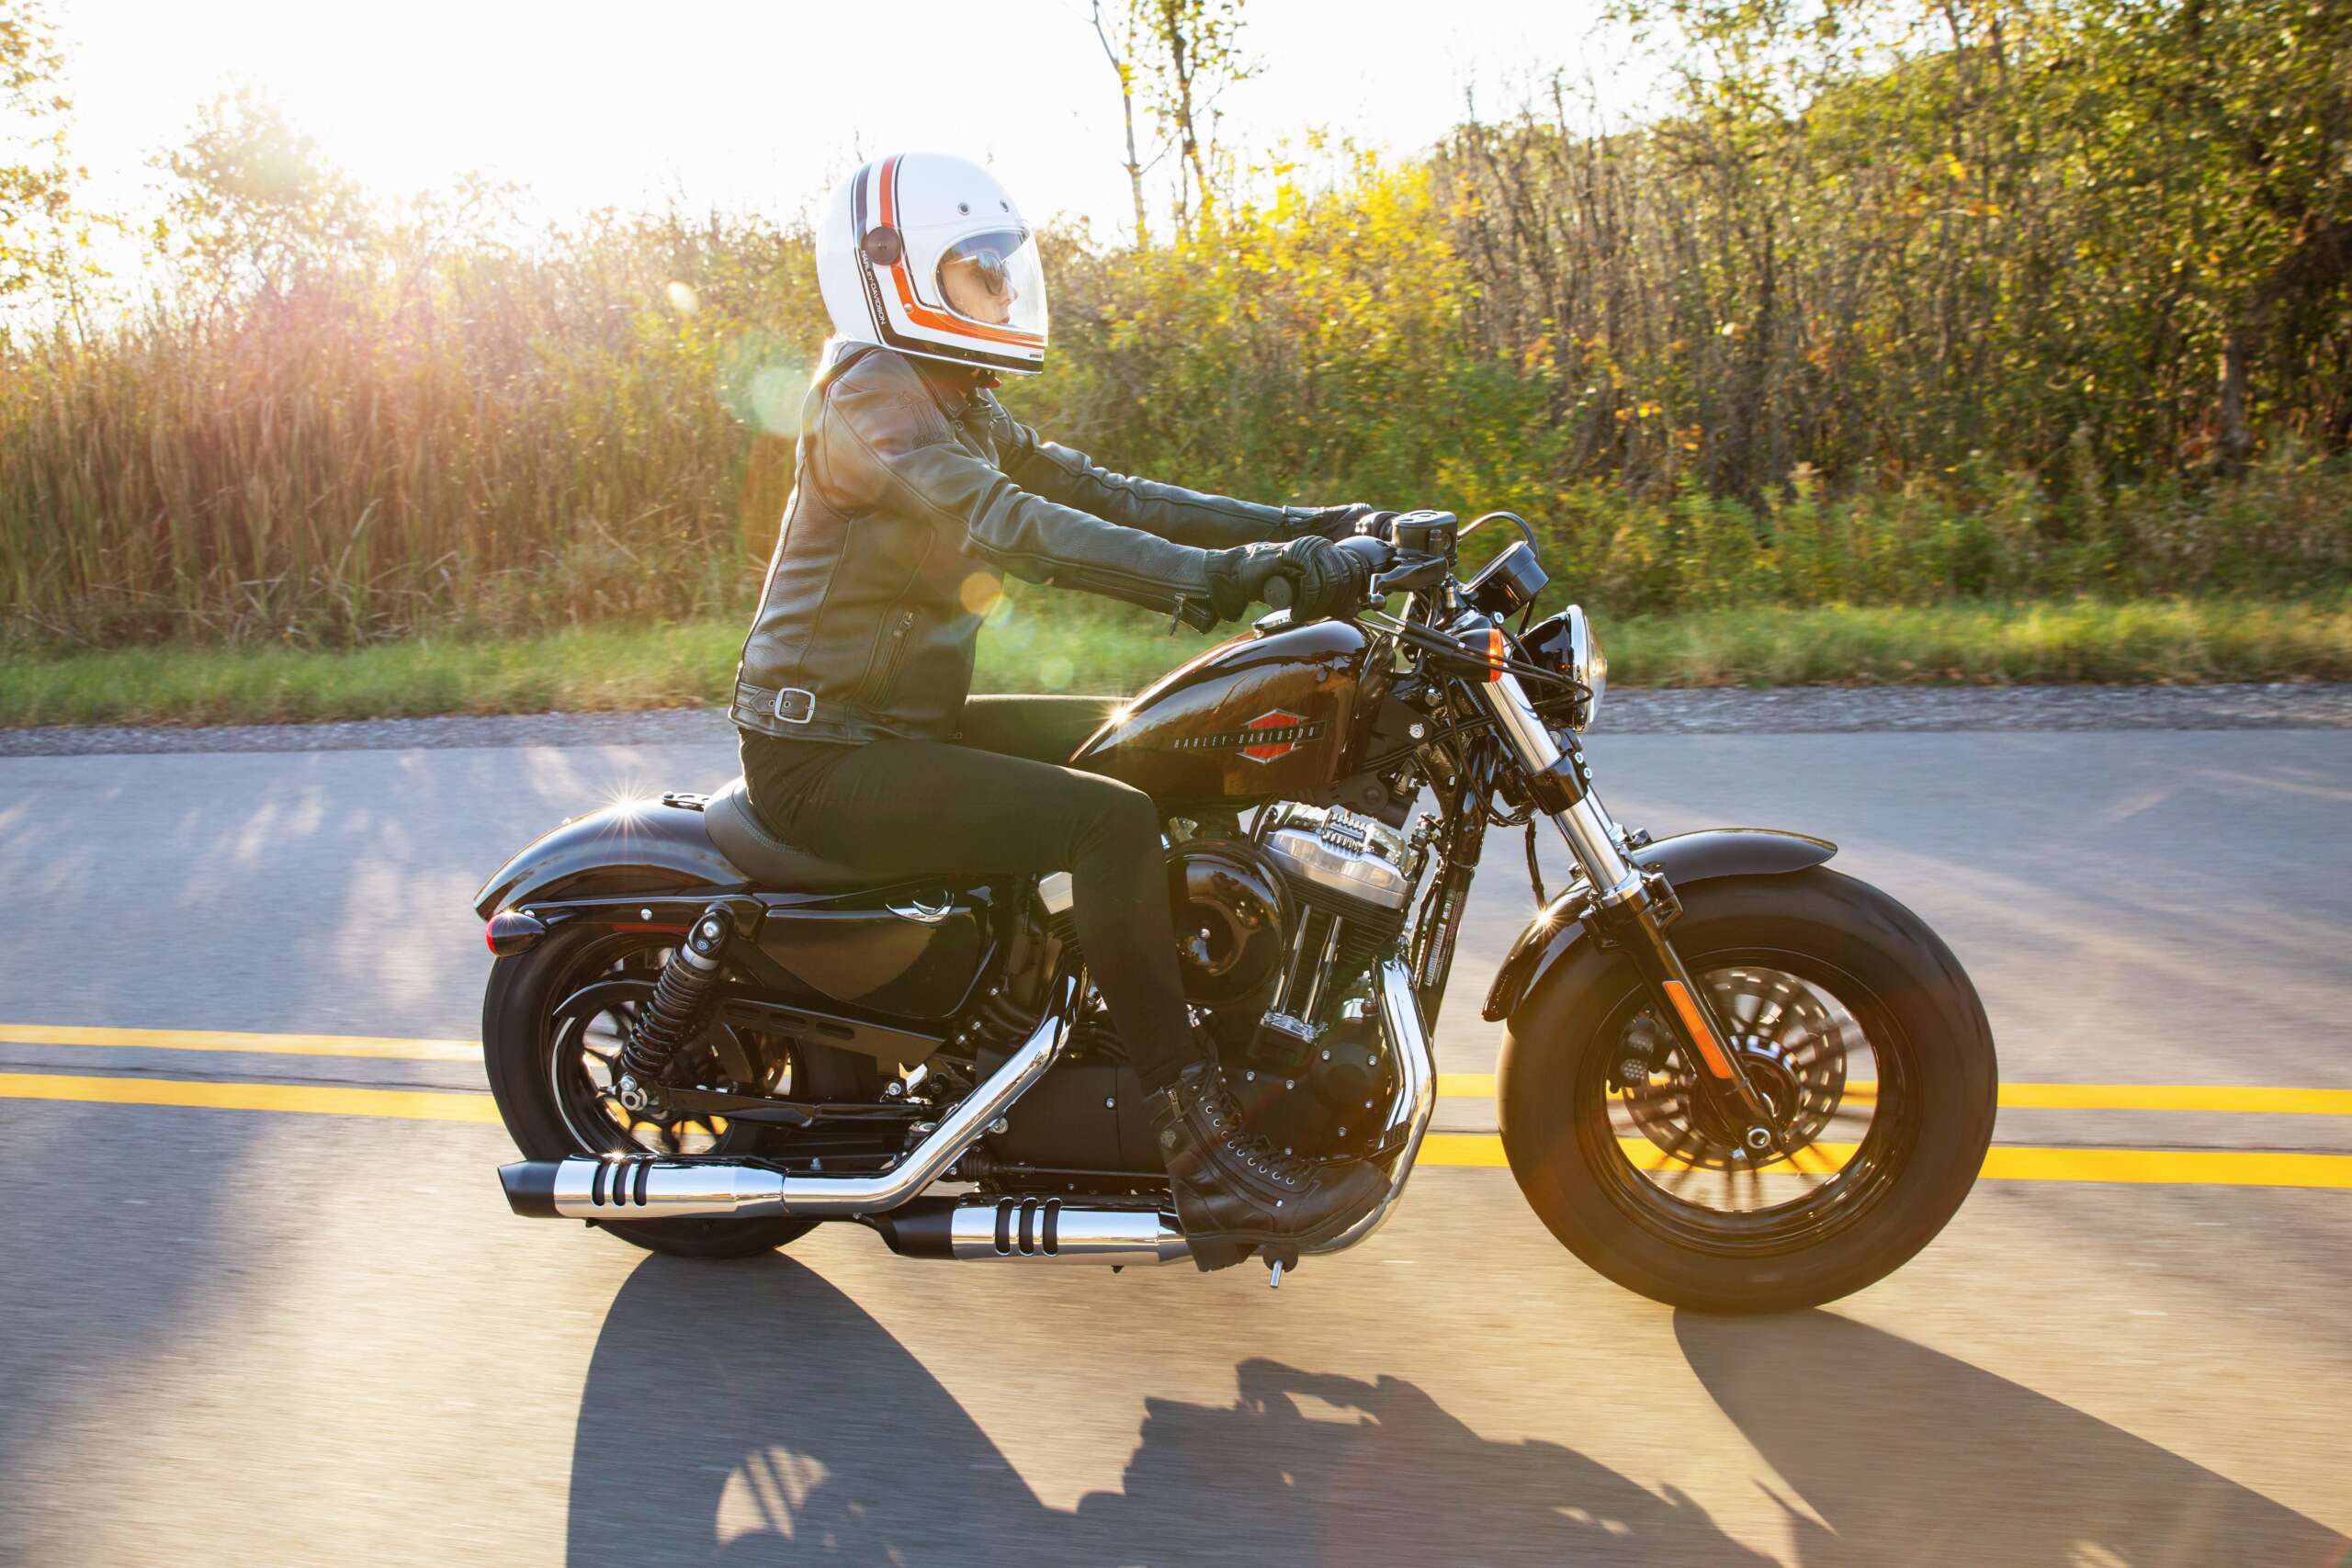 Harley-Davidson Touring 2015 Images | MCNews.com.au